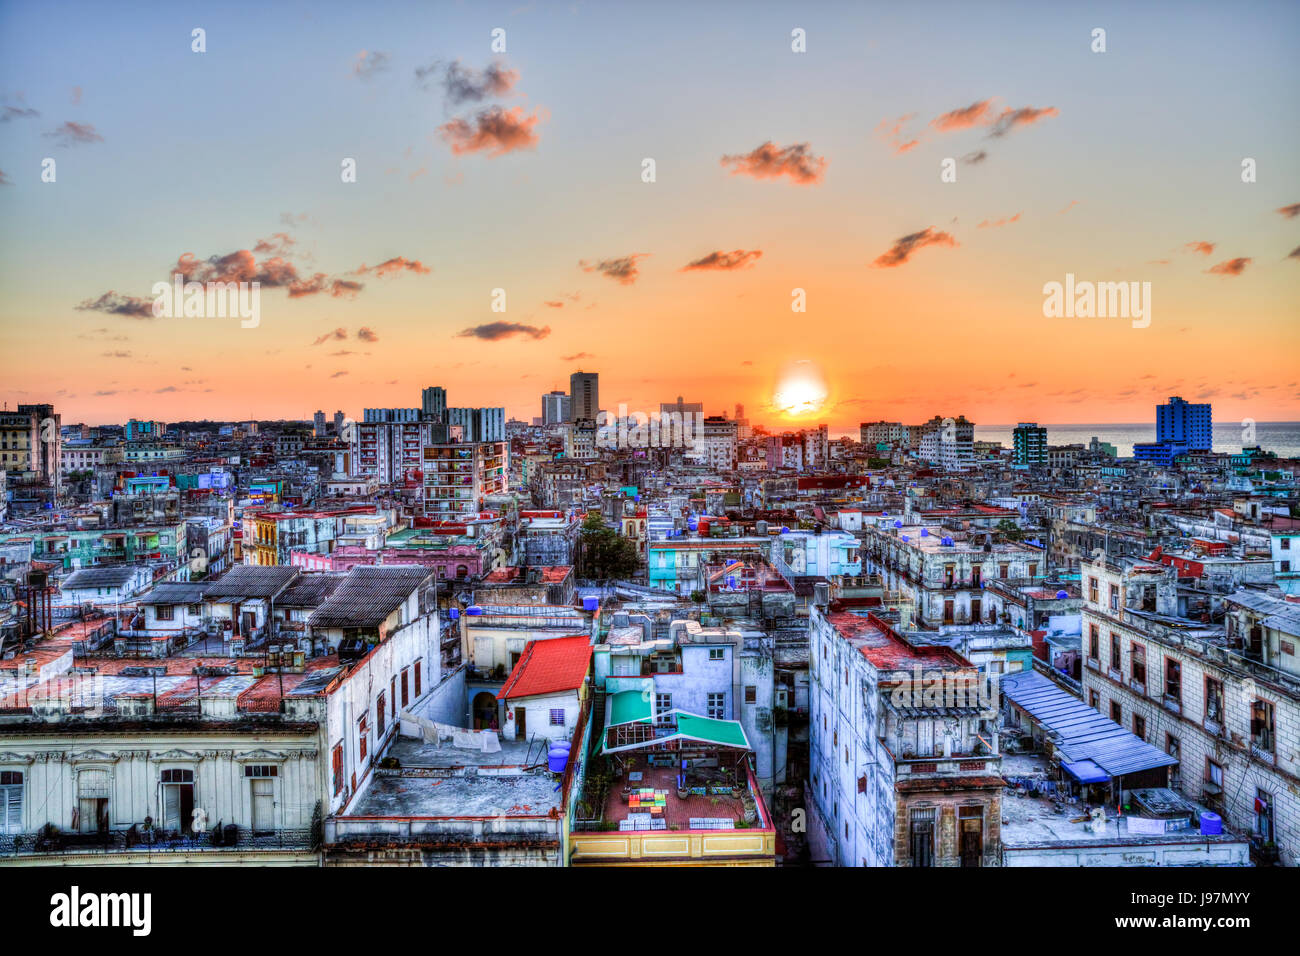 Havana Cuba rooftops, Havana City Cuba, Havana sunset, Cuba sunset, Havana old town, Old Havana, Habana Vieja, Cuba Havana homes, Cuba, Havana, sunset Stock Photo